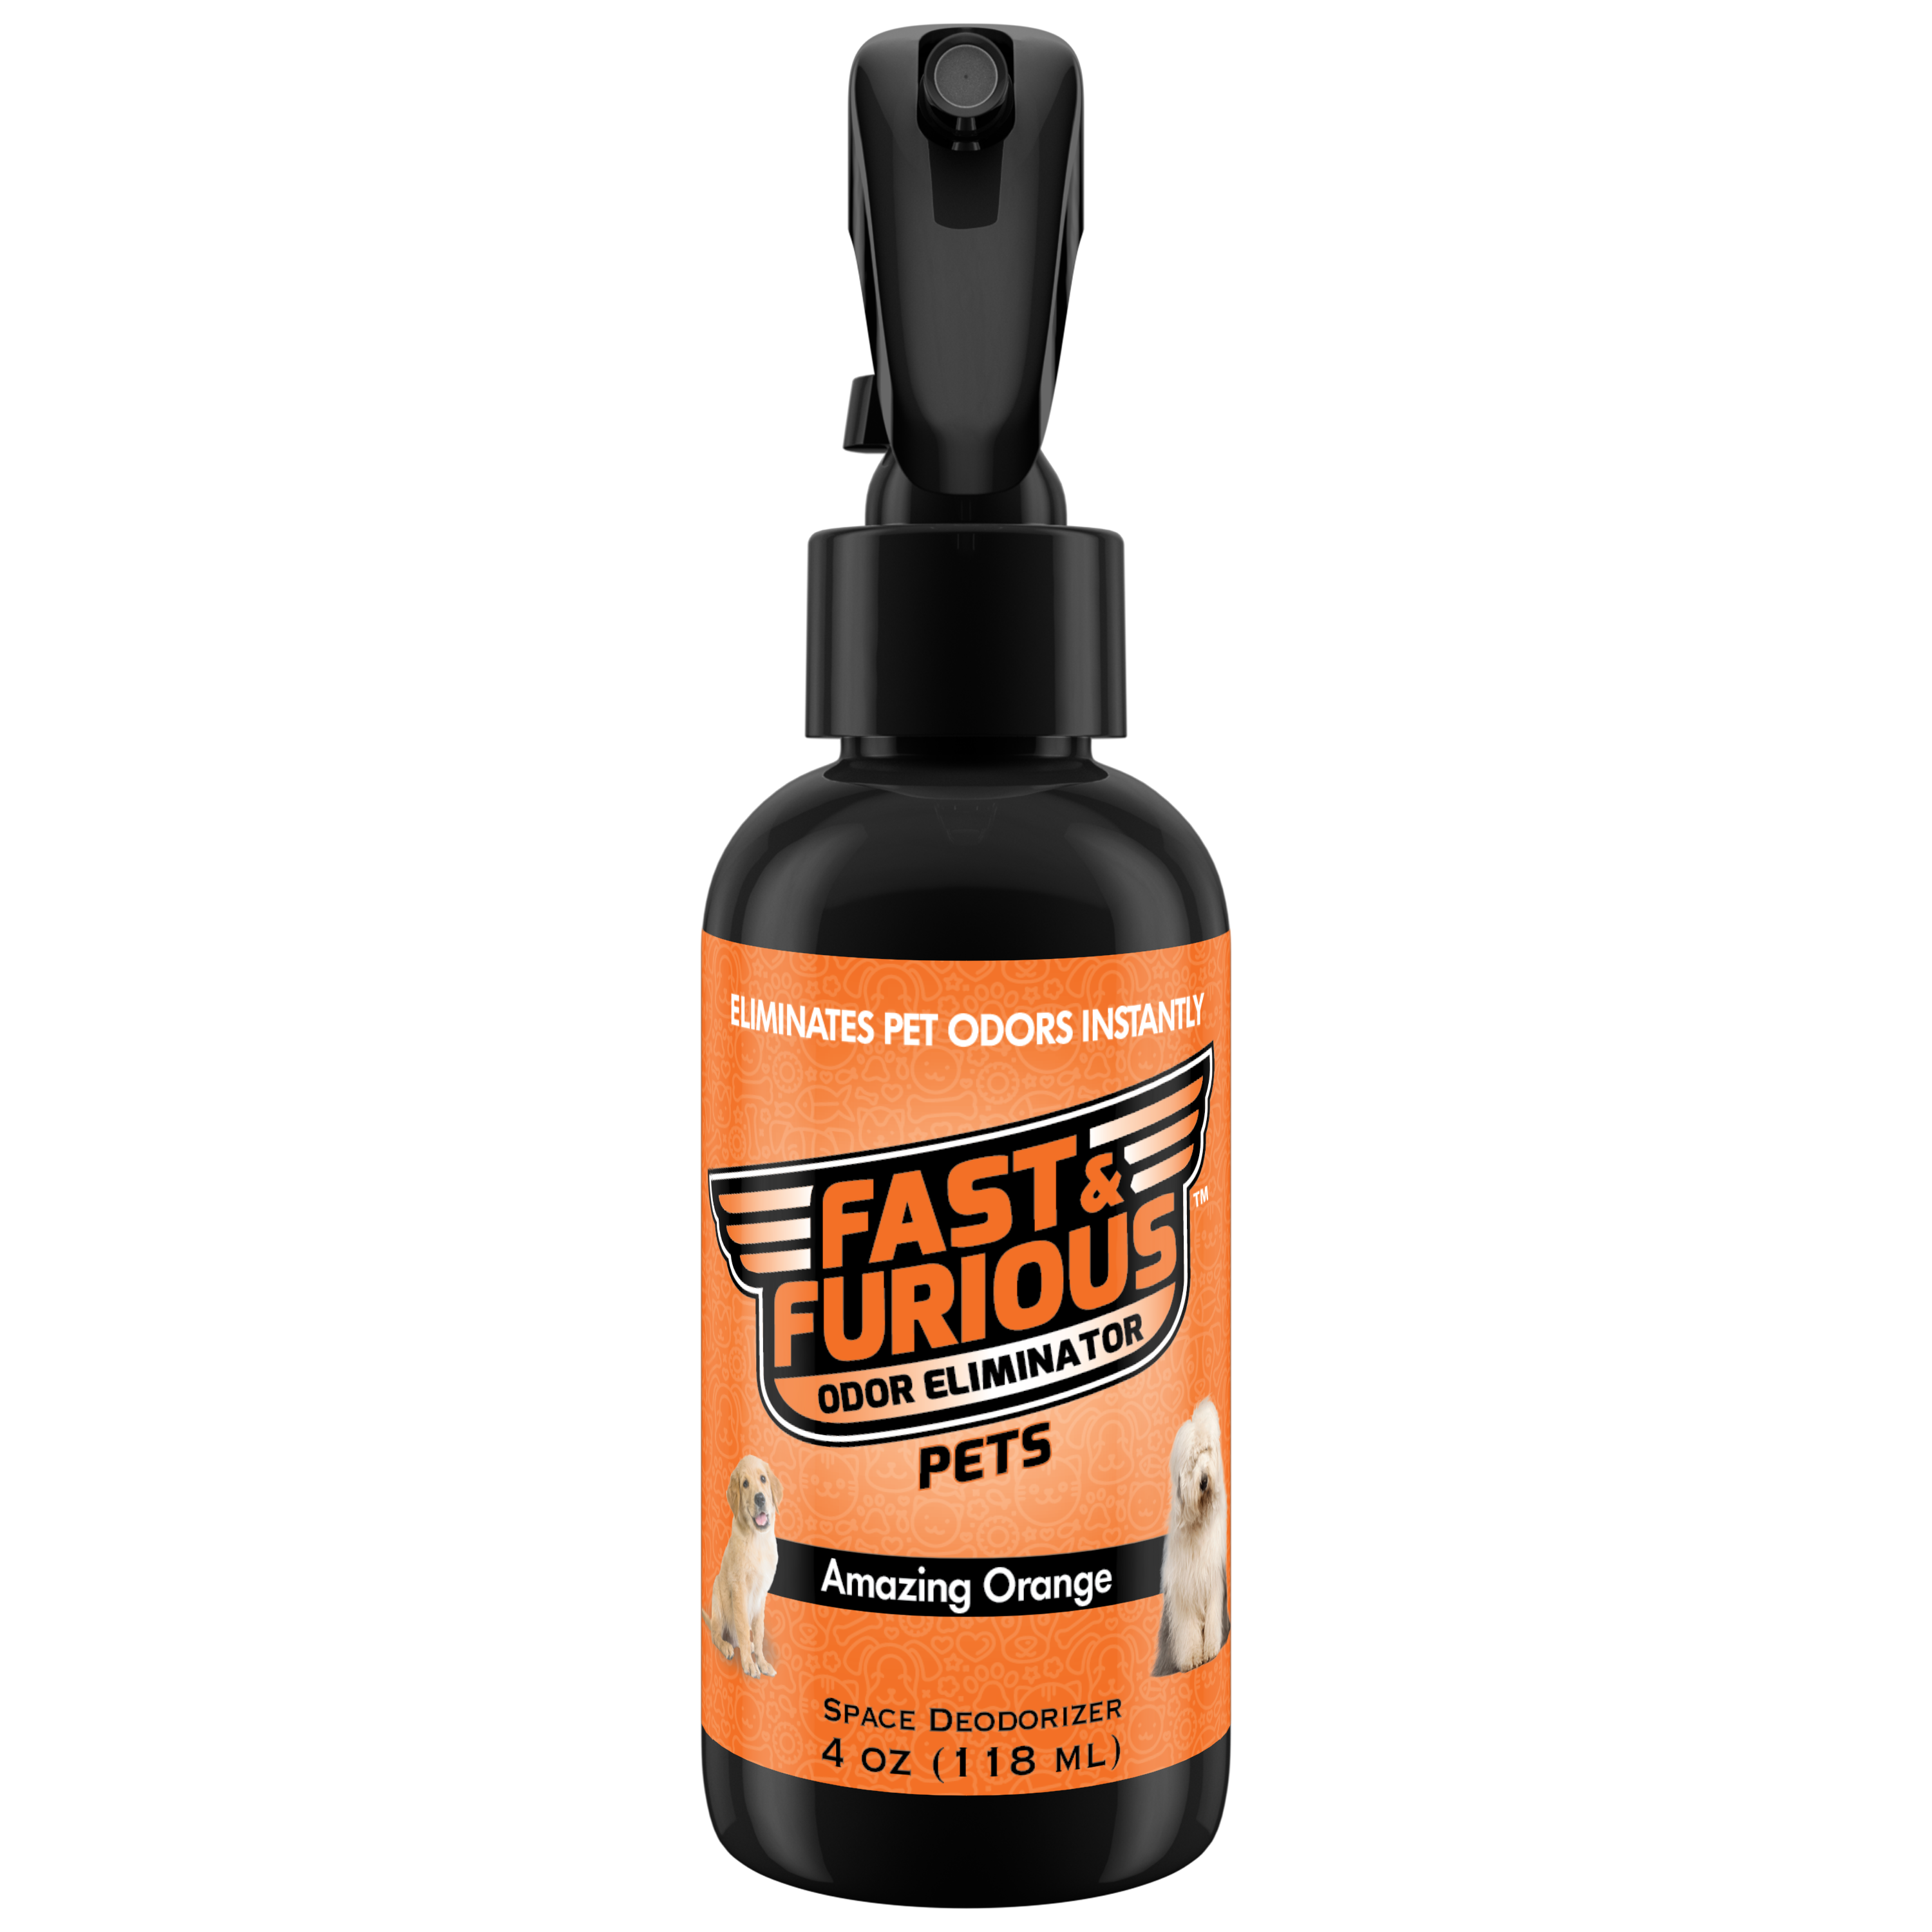 Fast and Furious Pets Odor Eliminator - Amazing Orange Scent